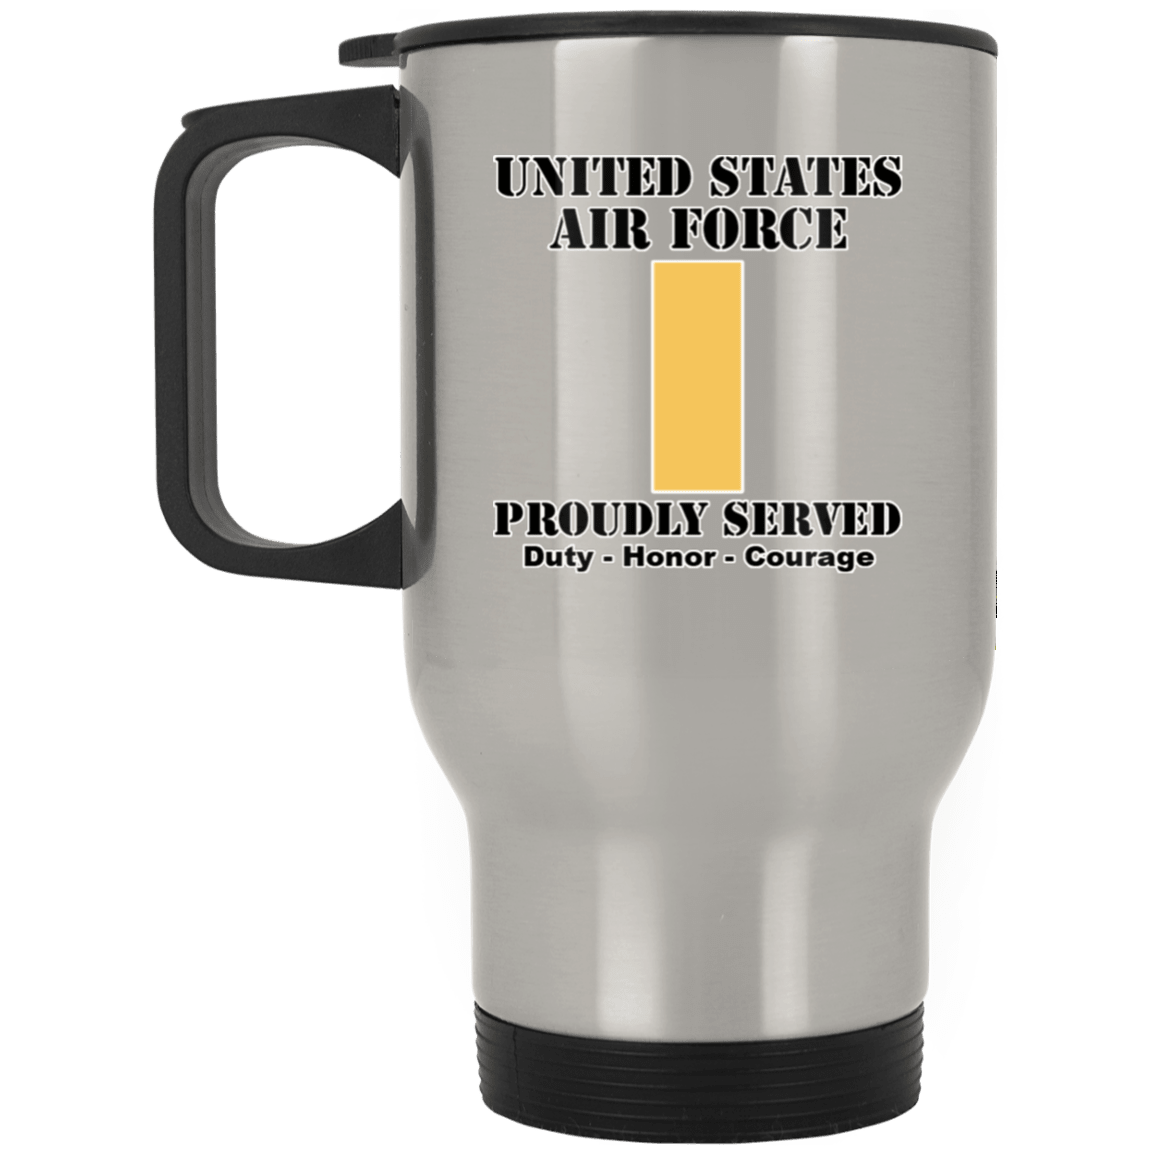 US Air Force O-1 Second Lieutenant 2d Lt O1 Commissioned Officer Ranks White Coffee Mug - Stainless Travel Mug-Mug-USAF-Ranks-Veterans Nation